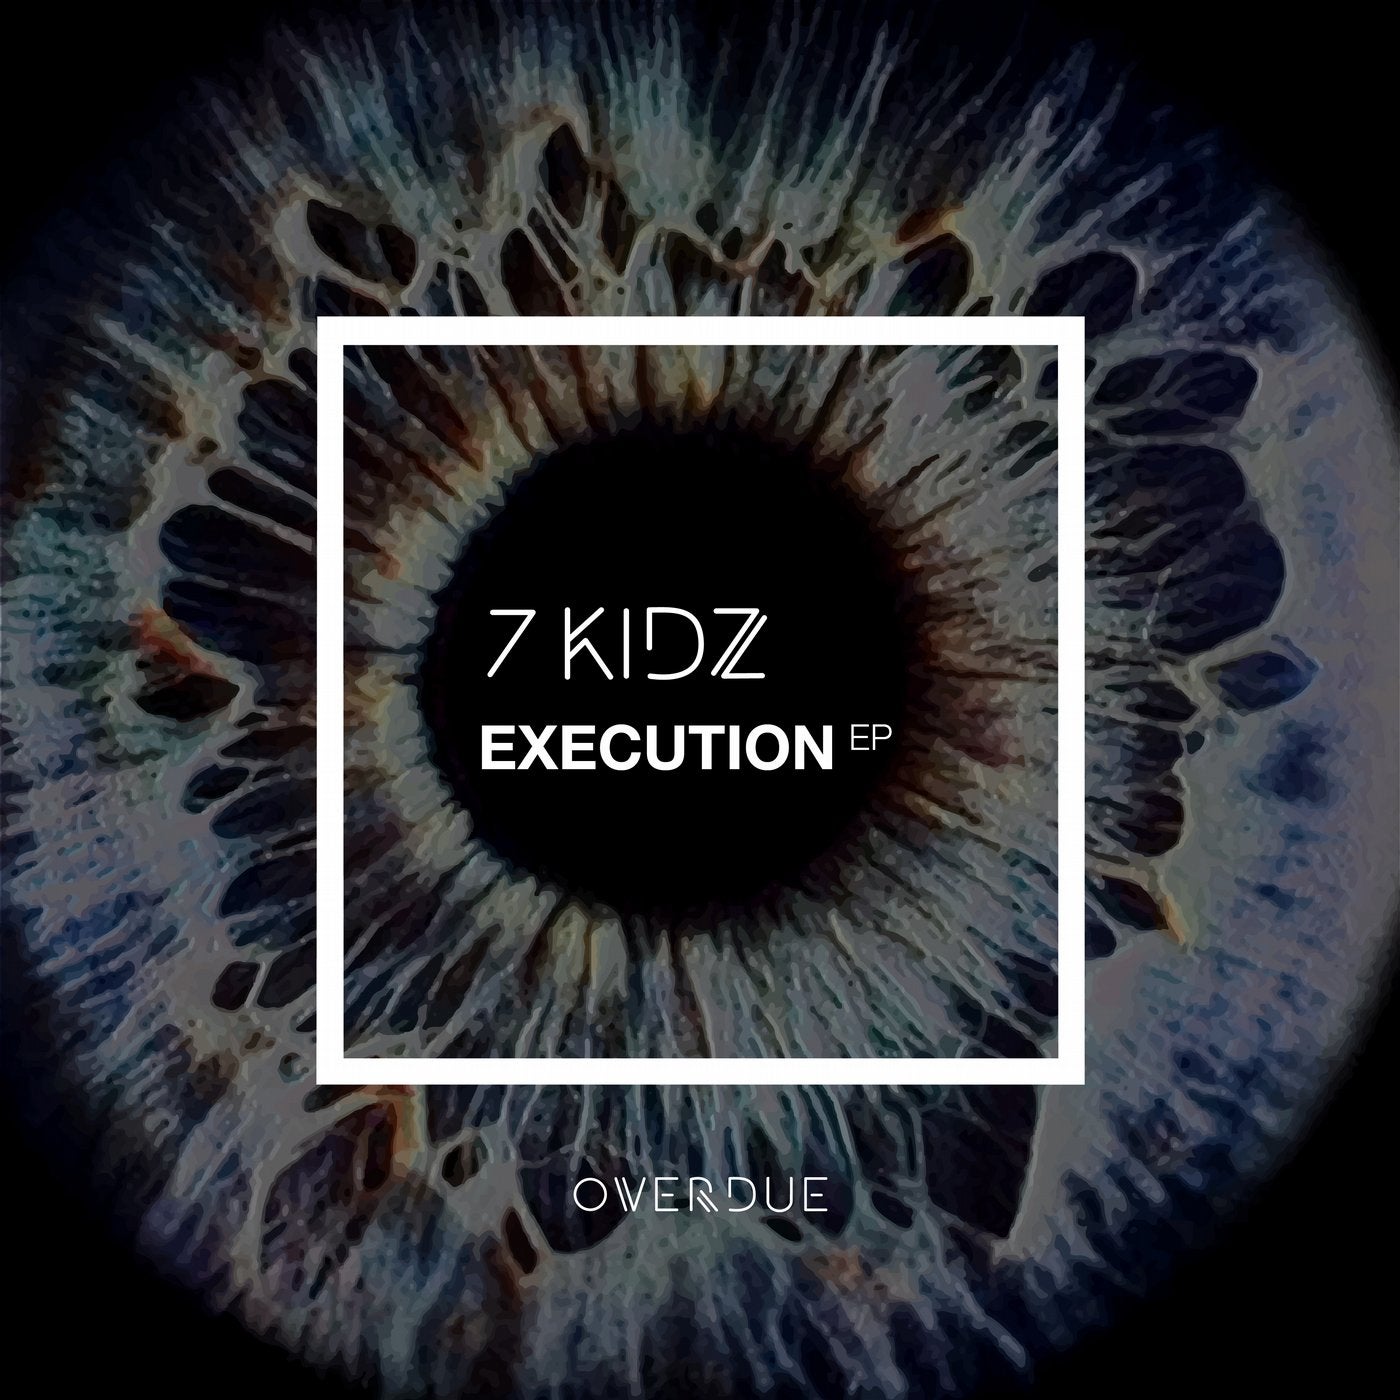 Execution ep